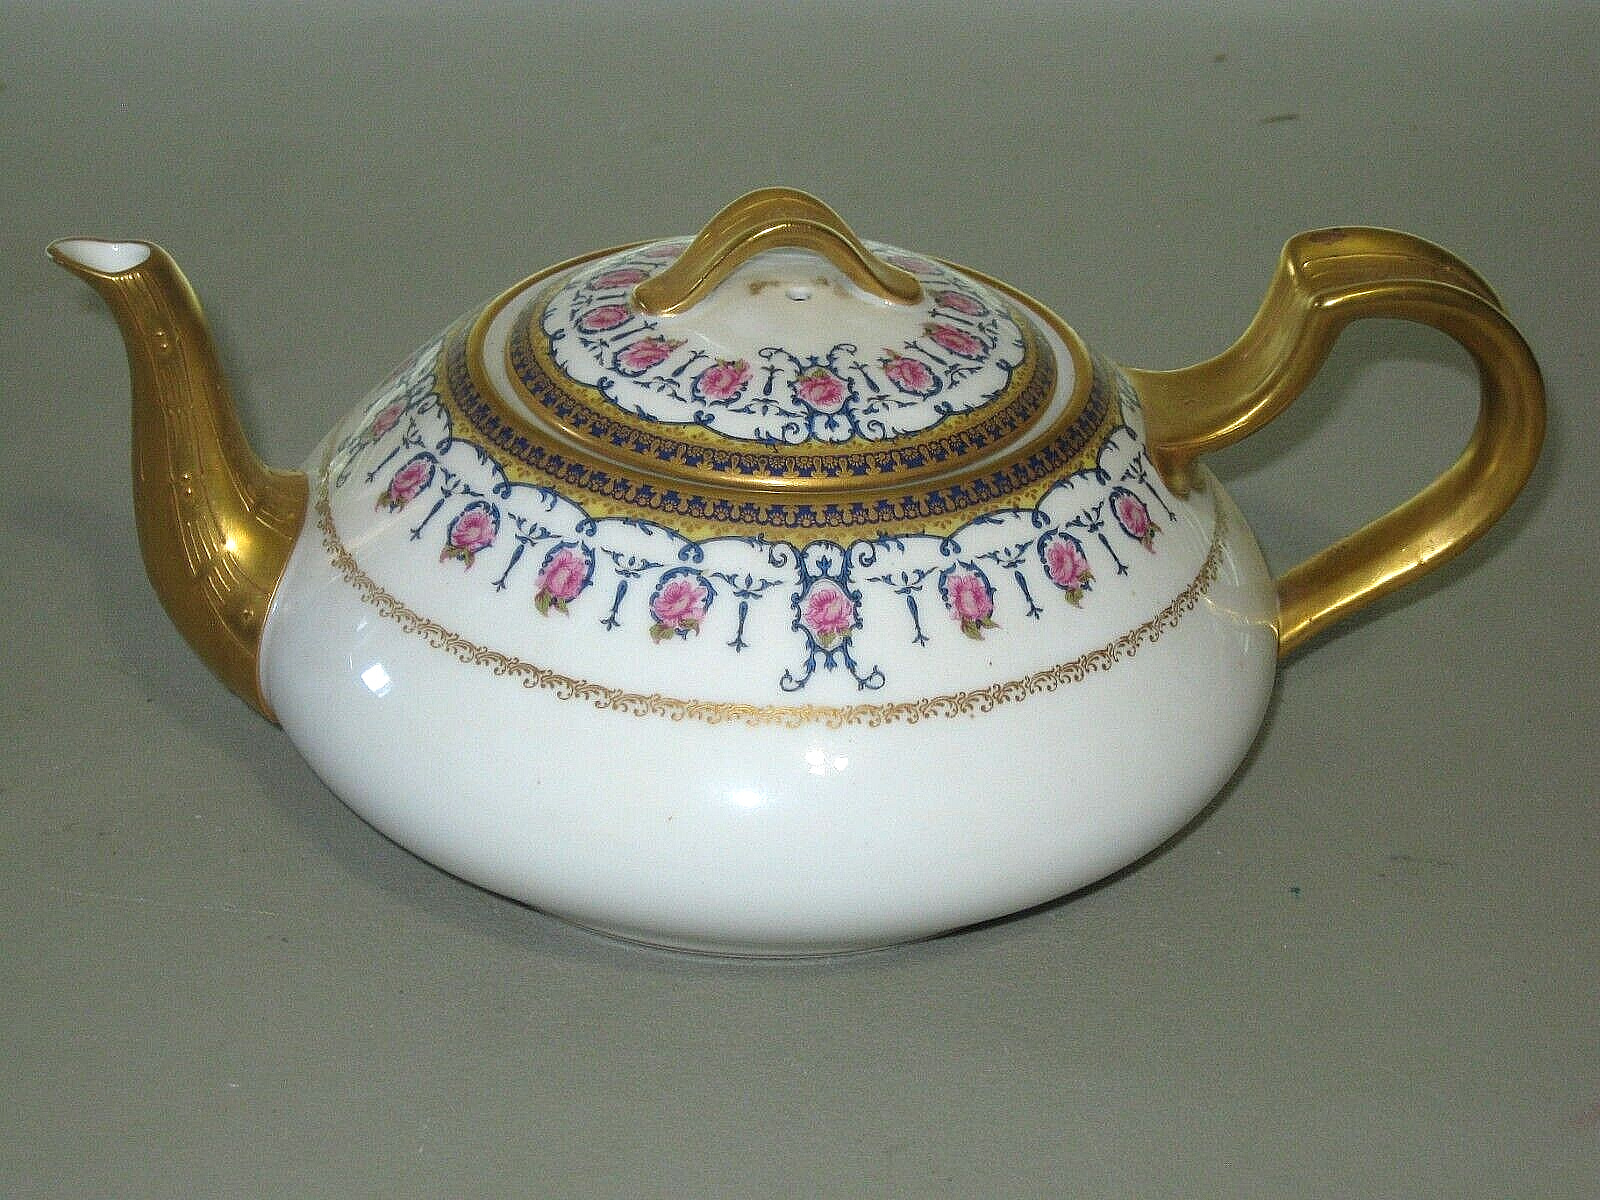 Antique Haviland Limoges Tea Pot Schleiger 970 With Gold Handle, Lid, and Spout